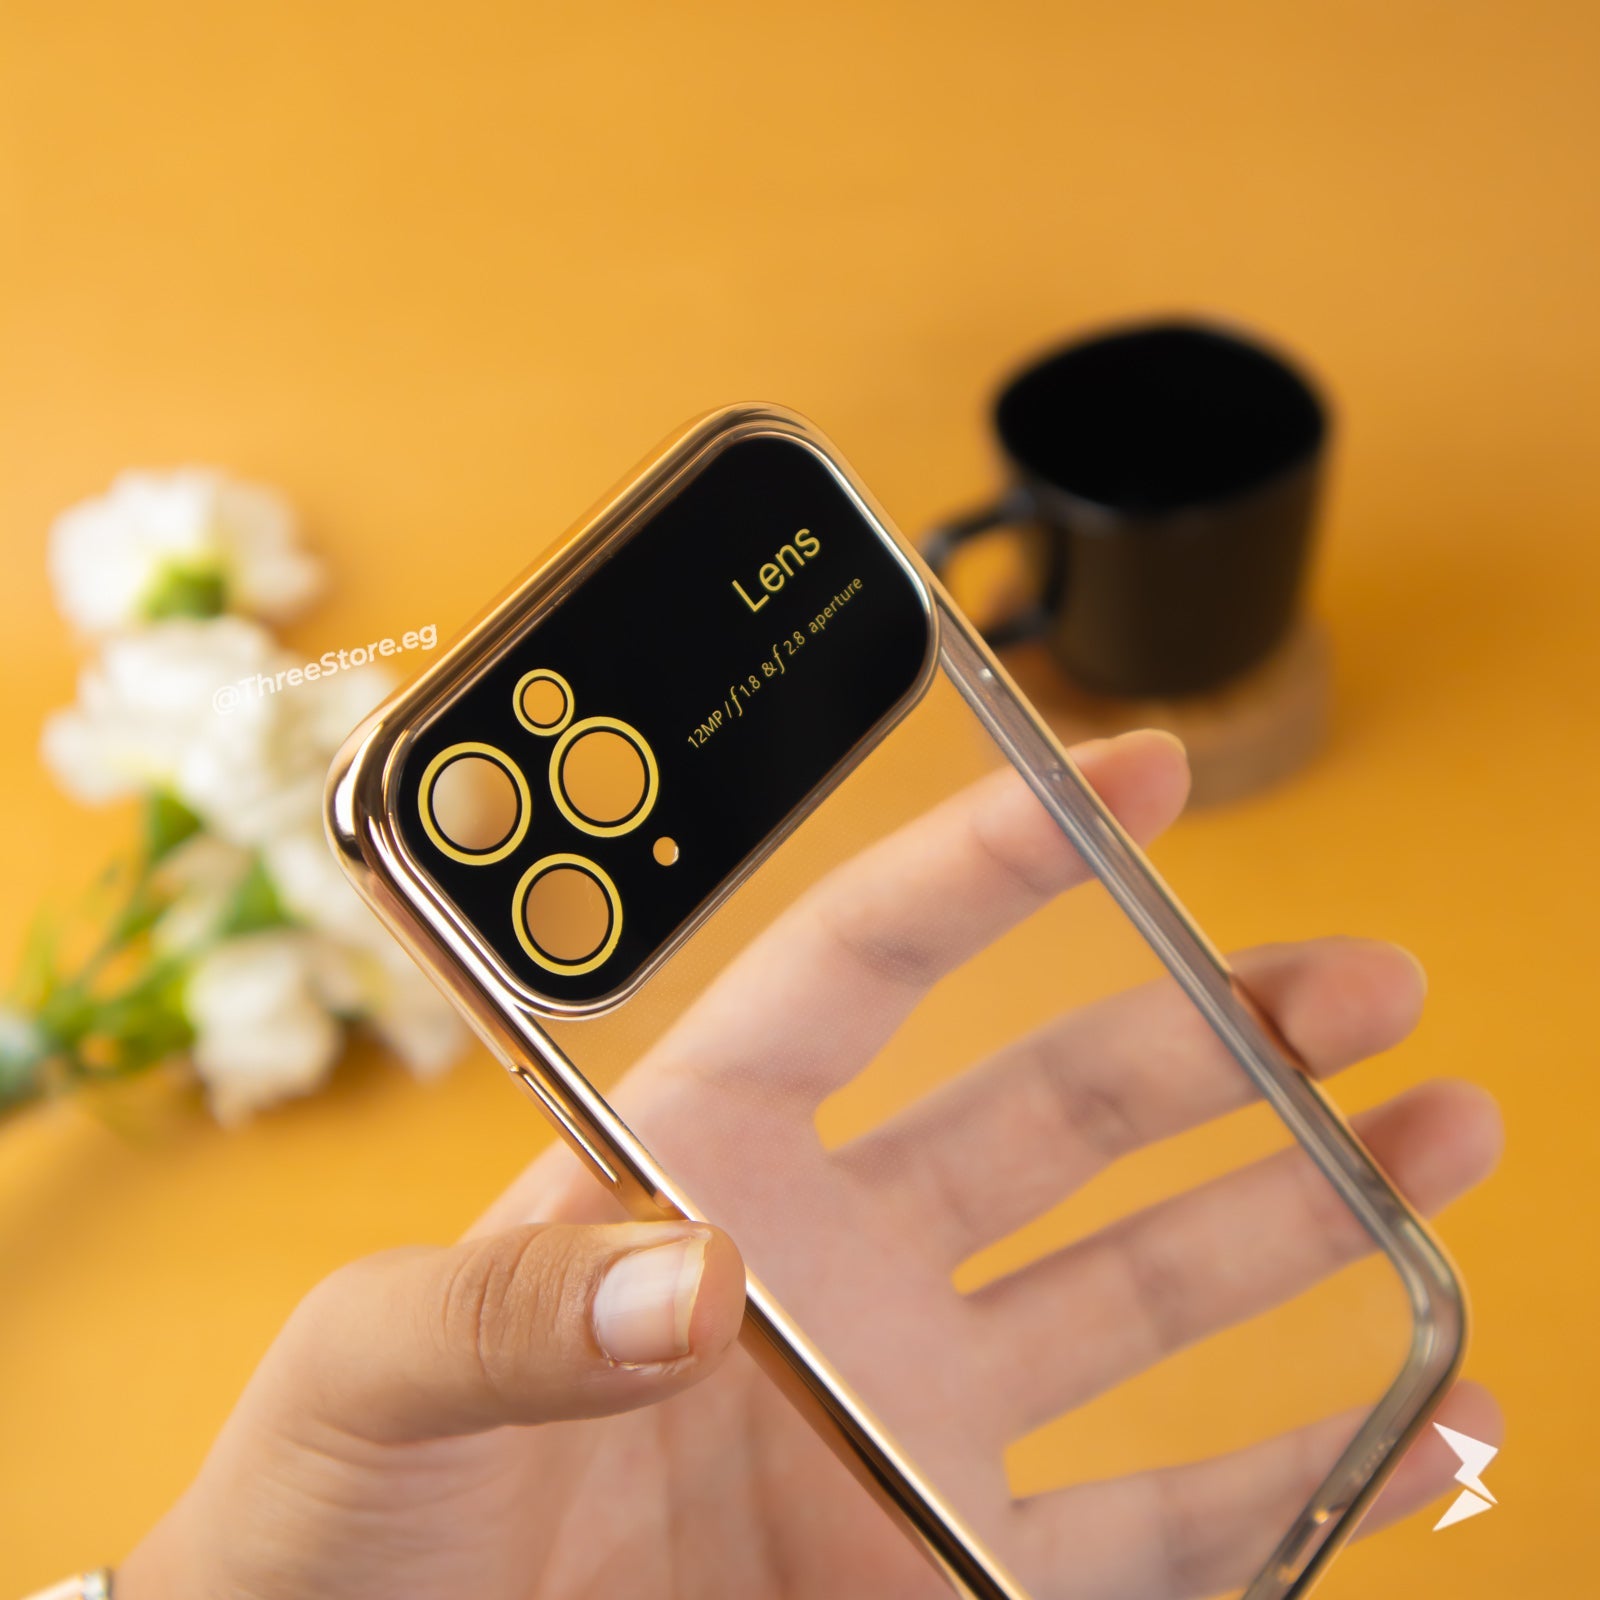 جراب iPhone 11 Pro Max ب Camera Protection لتحمي الكاميرا مع مرونه عاليه للجراب